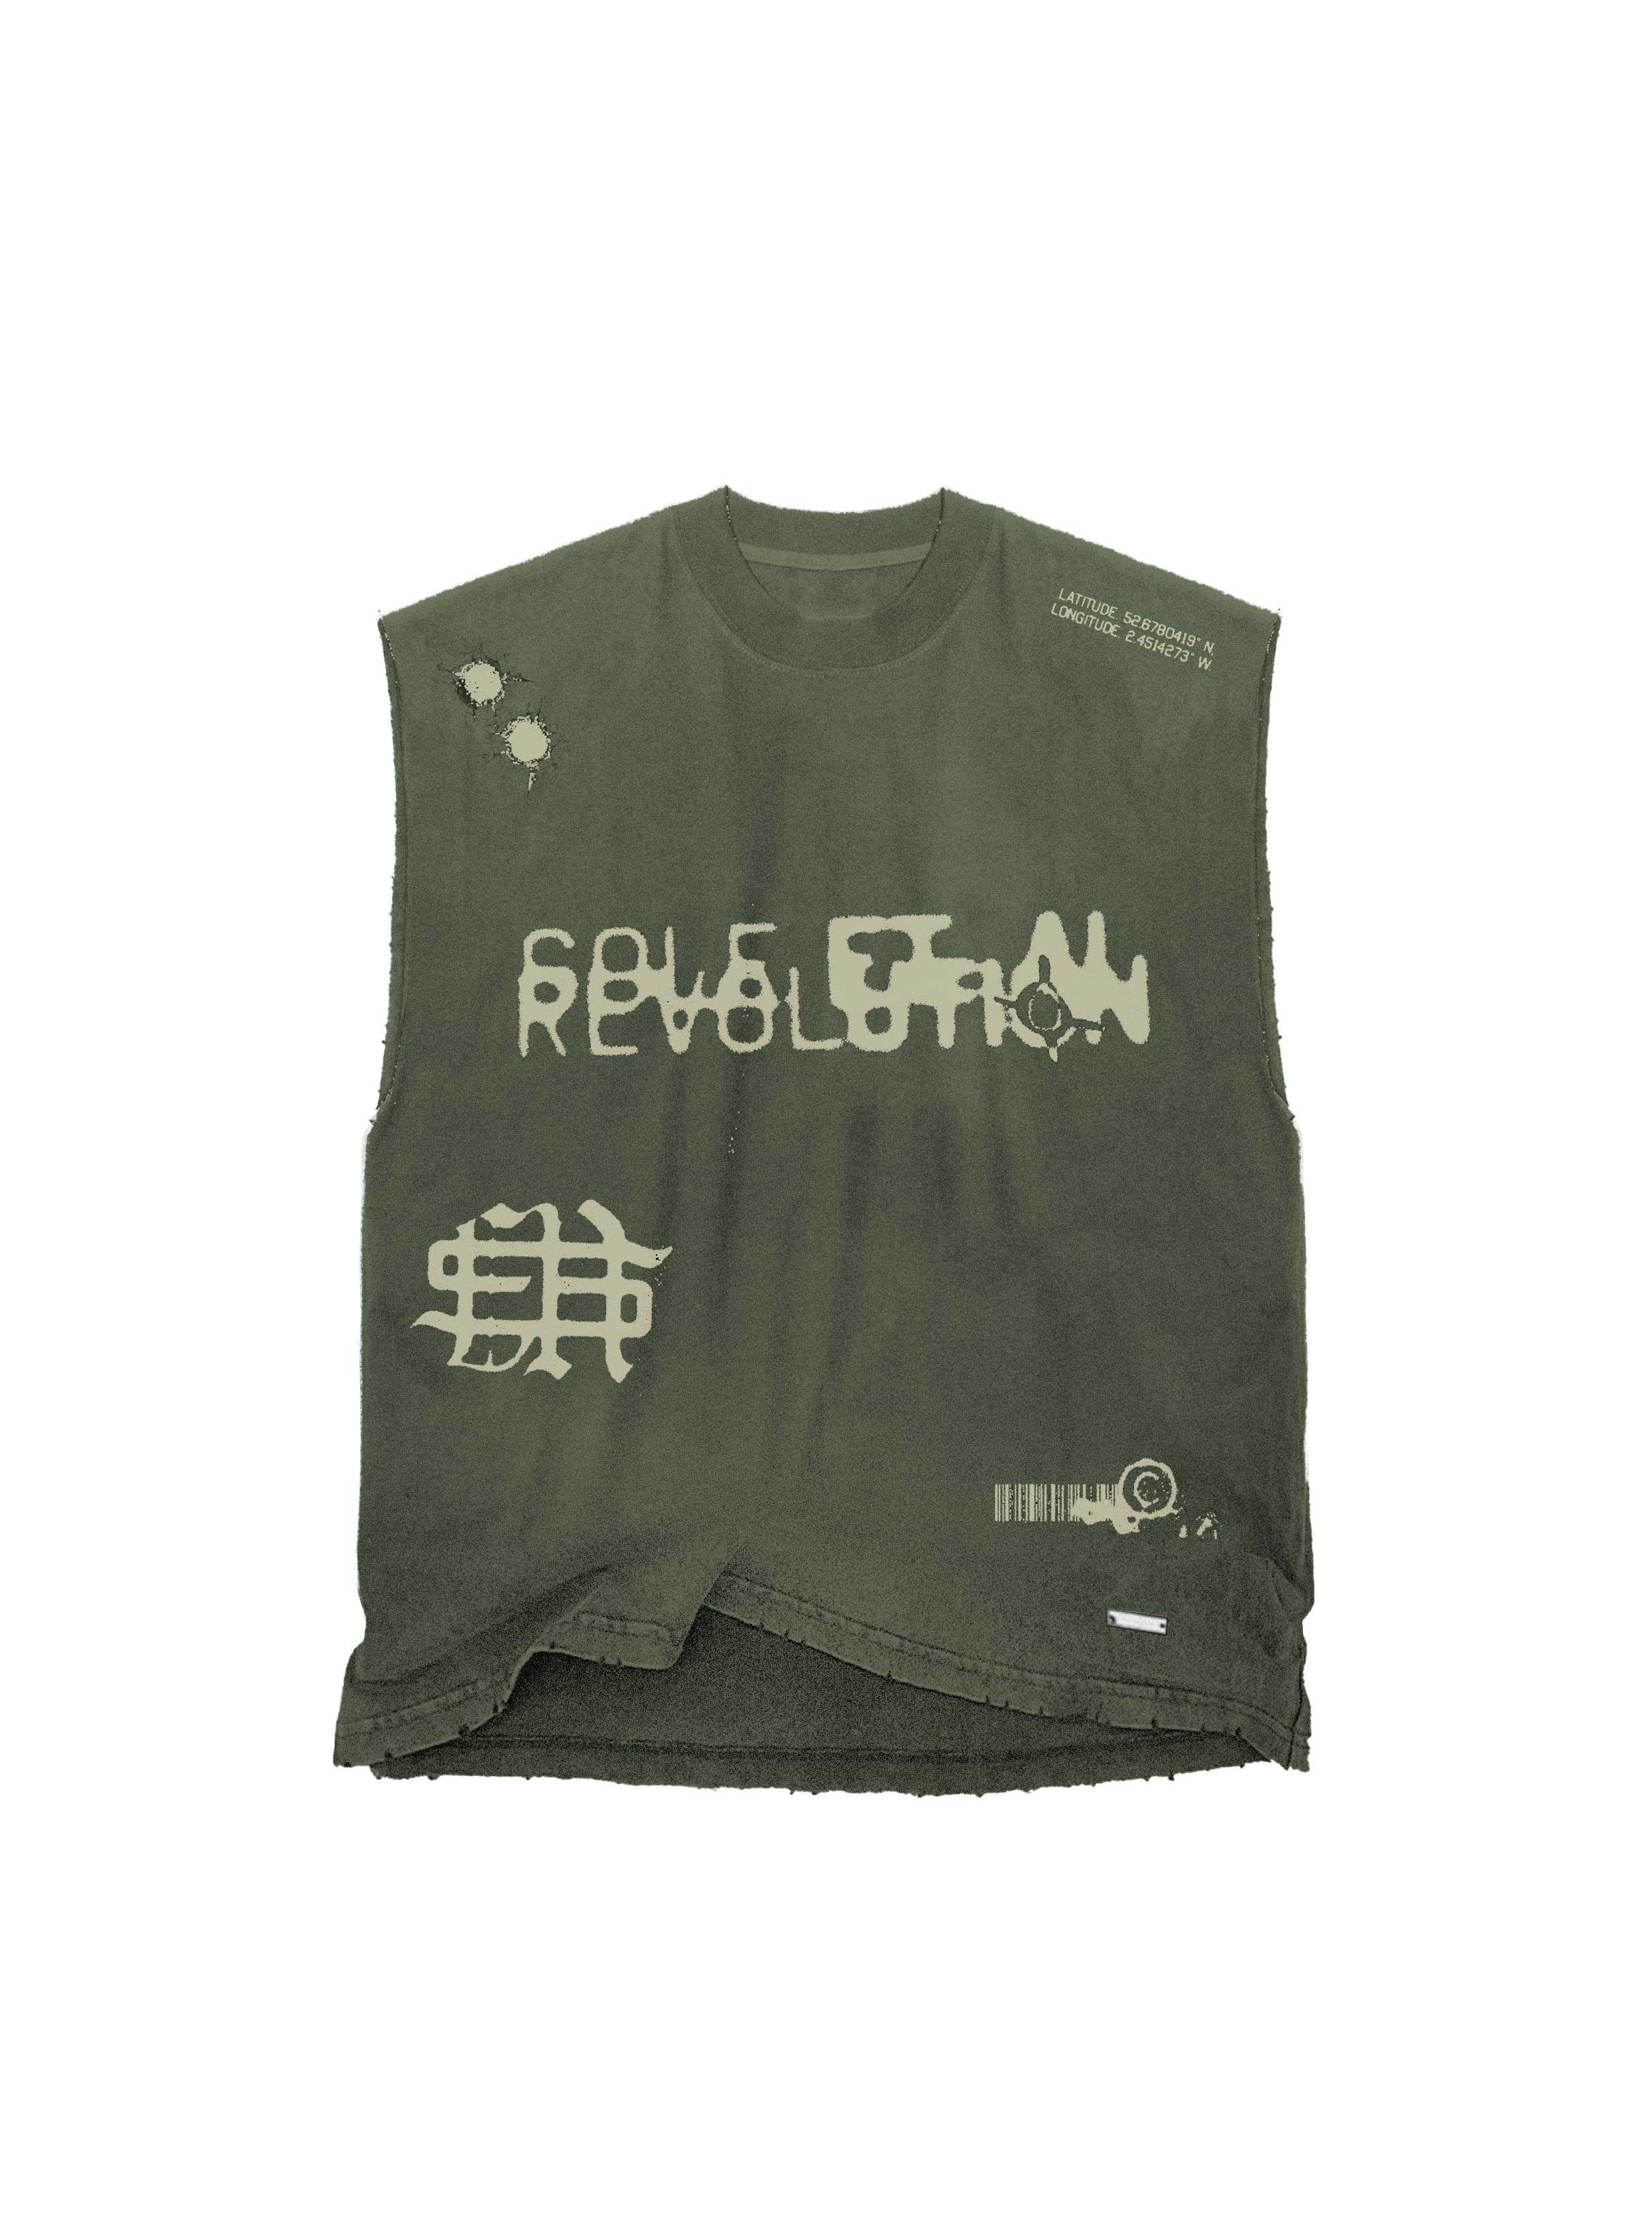 Sole et. Camiseta sin mangas Al Revølutiøn : Verde militar / Arena